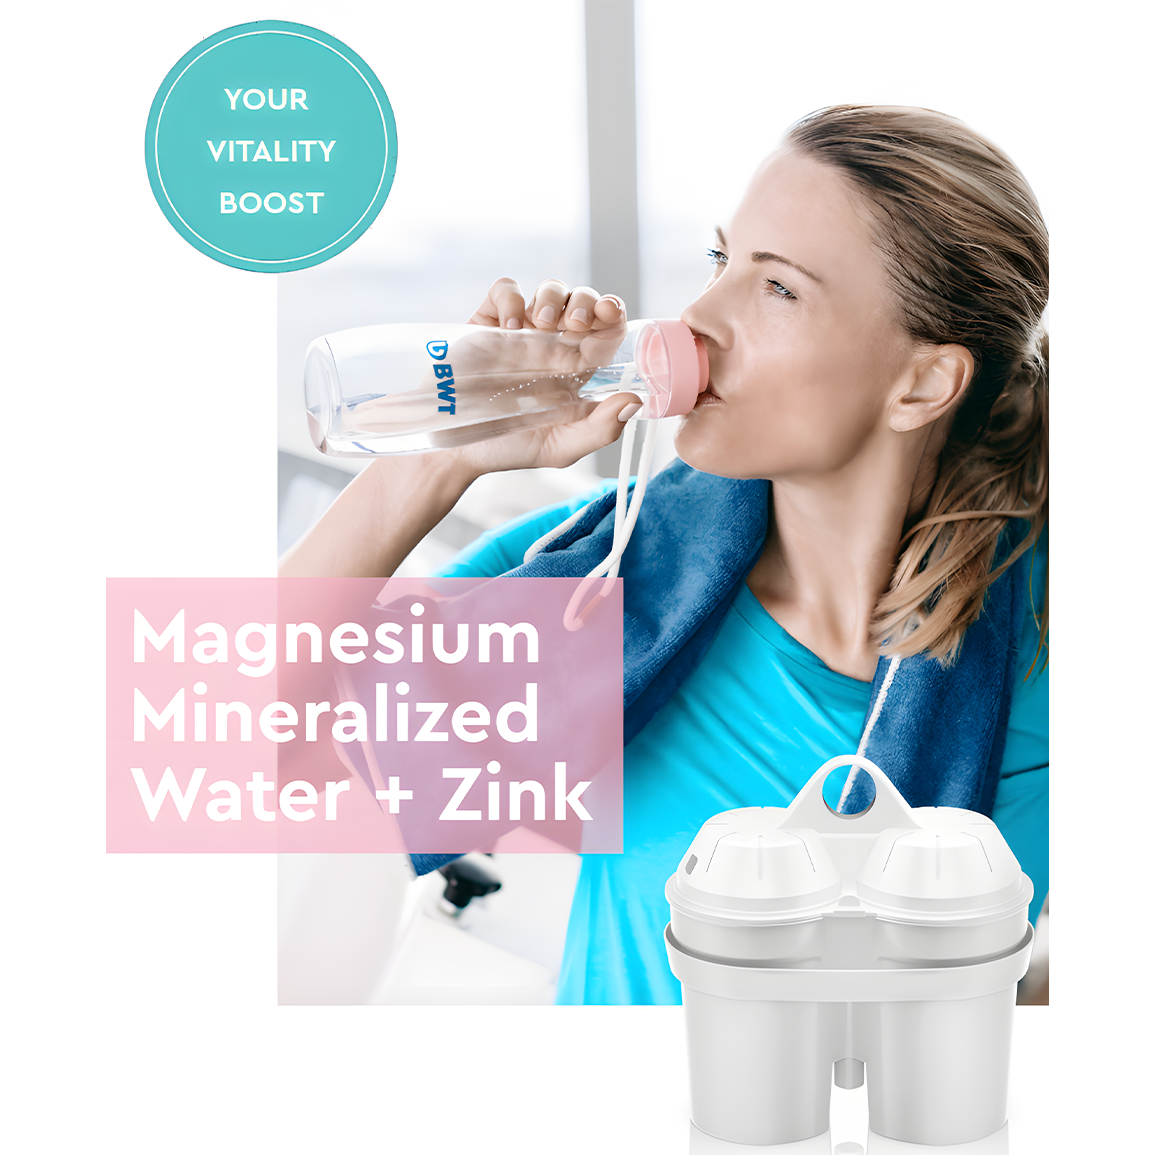 Magnesium Mineralized Water + Zinc